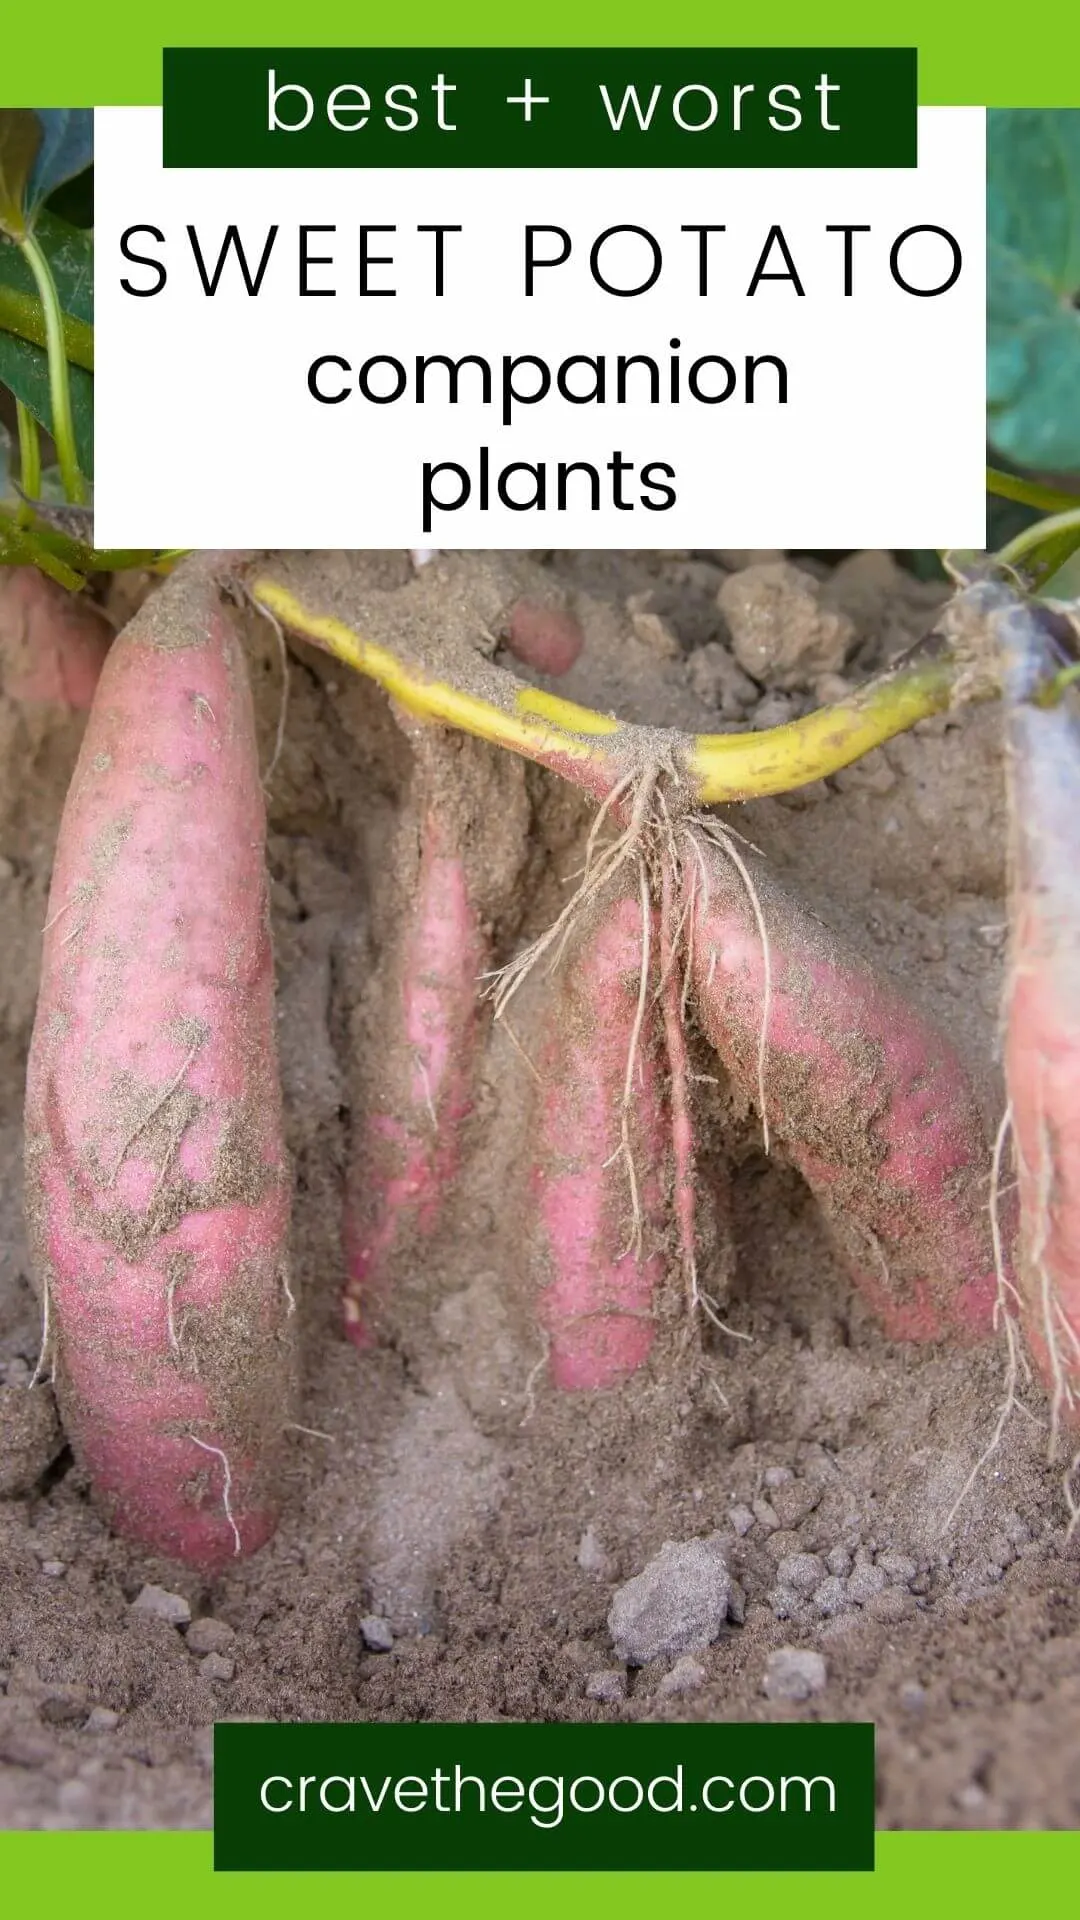 Best and worst sweet potato companion plants pinterest graphic.